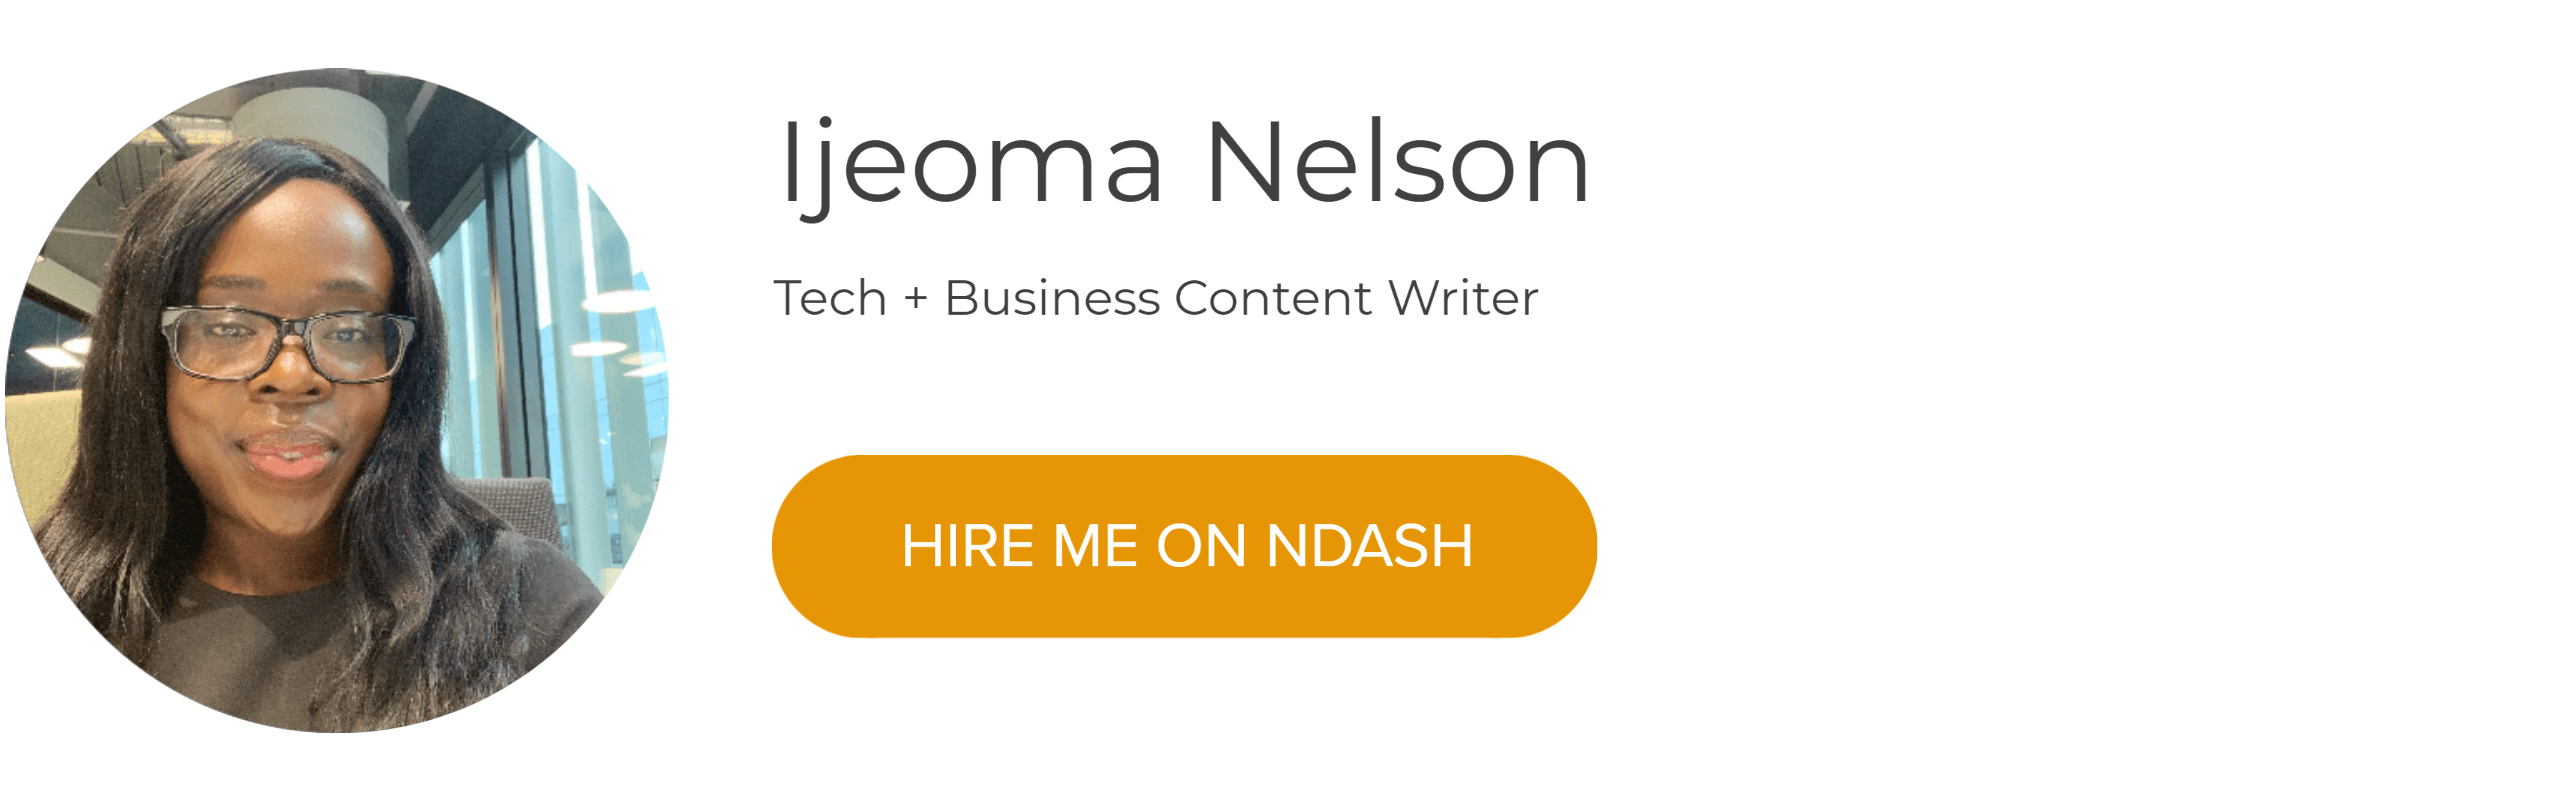 Ijeoma Nelson: Tech & Business Content Writer